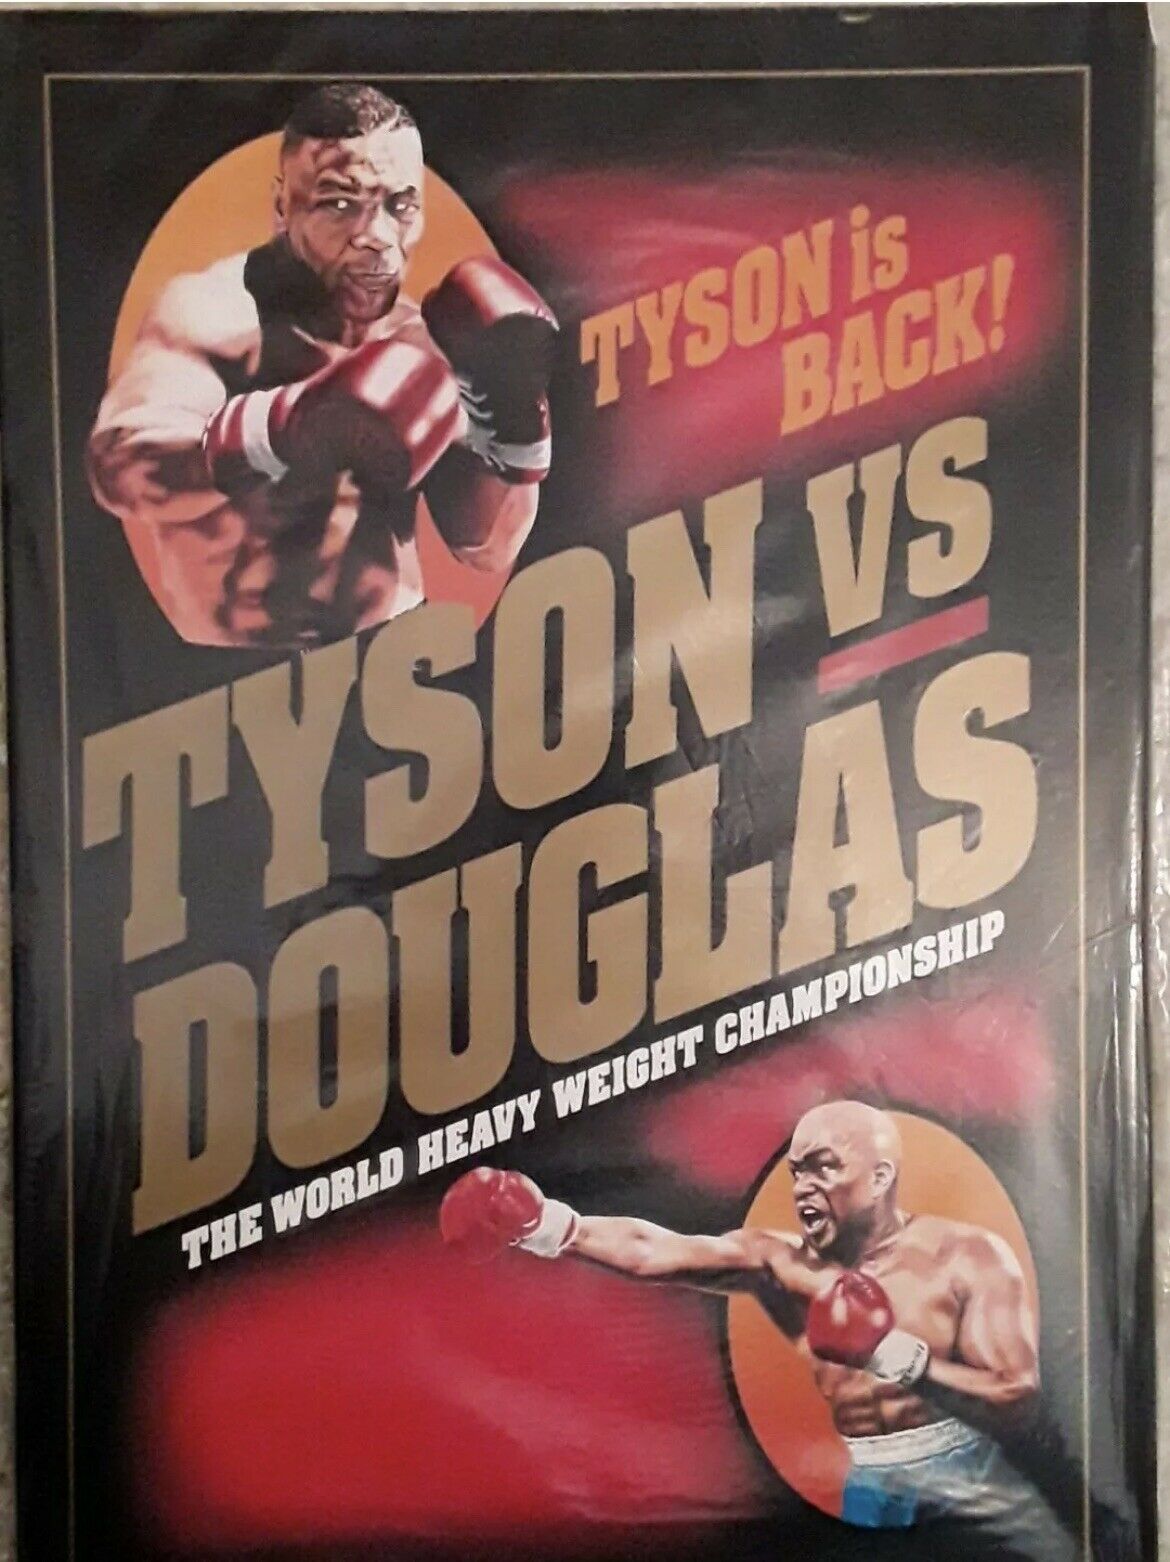 Mike Tyson vs. Buster Douglas - Wikipedia